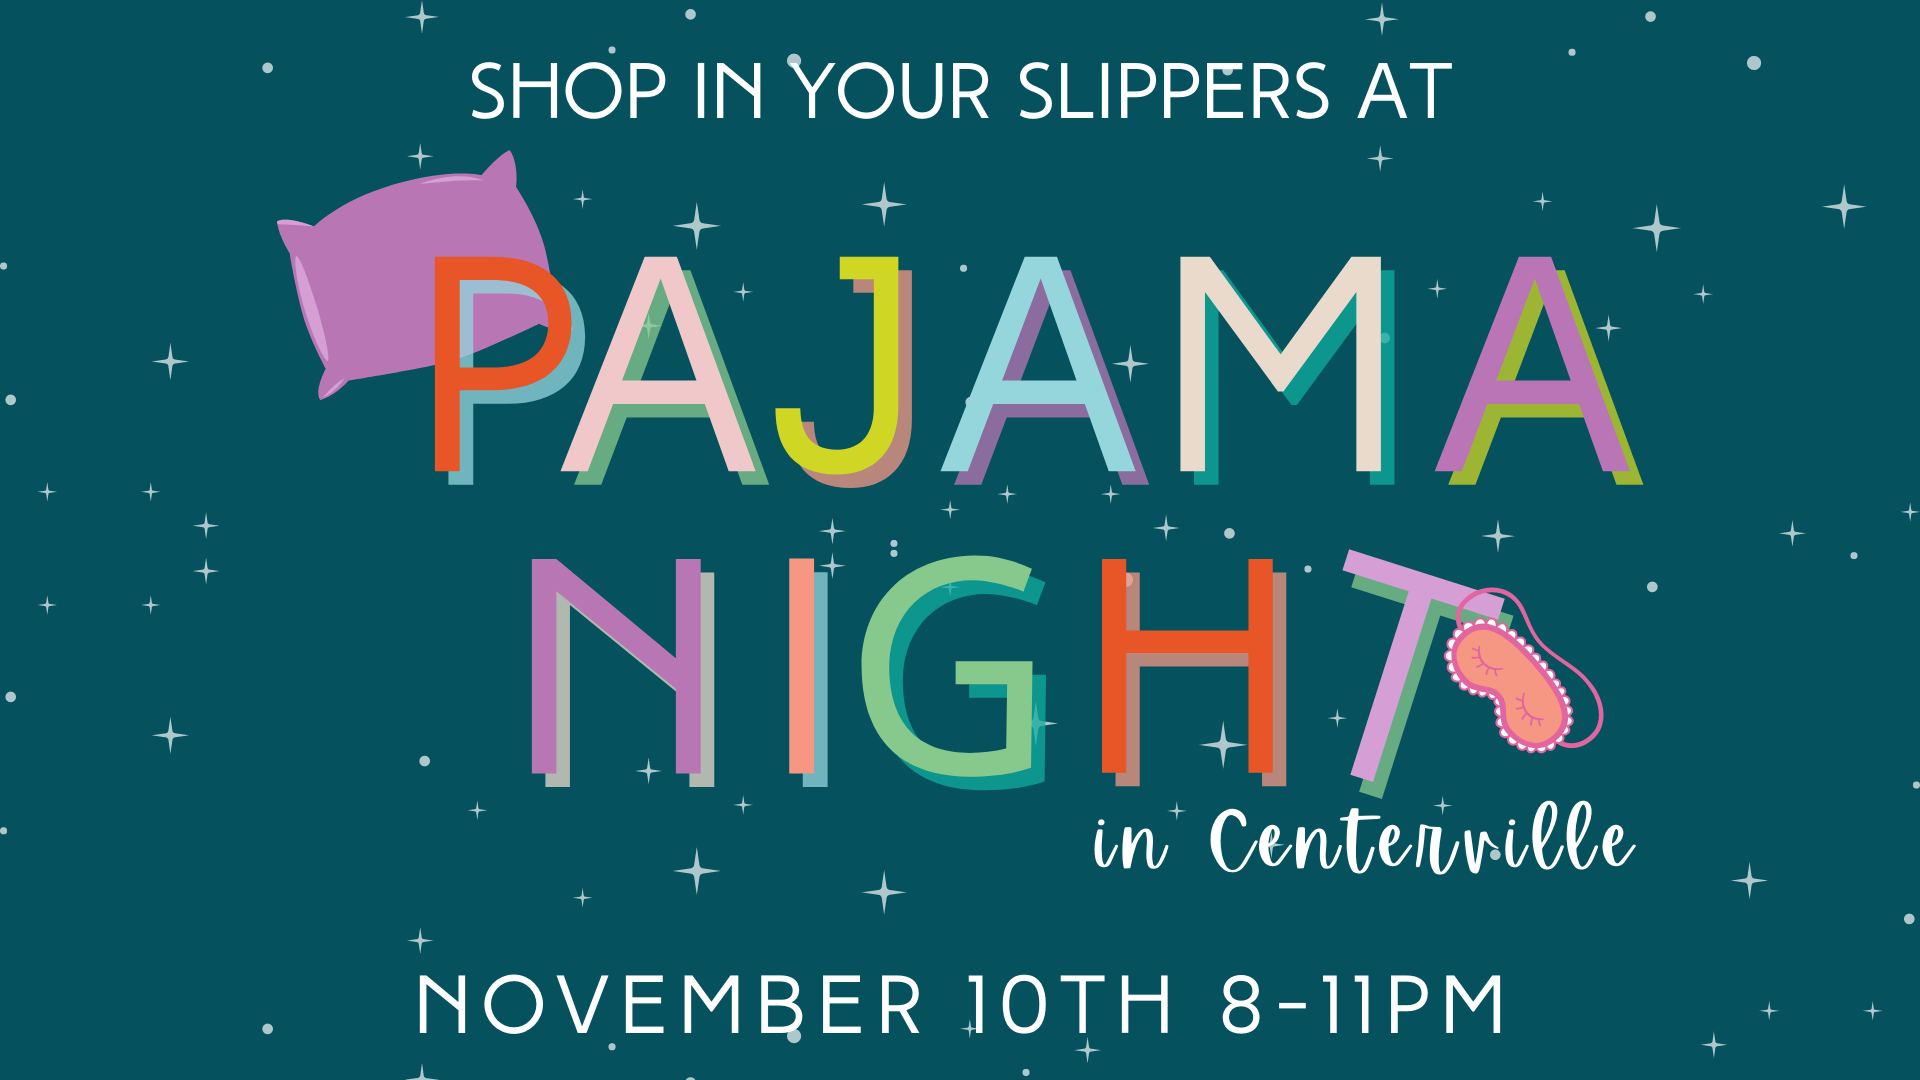 Pajama Night Promotional Image November 10th 8-11pm